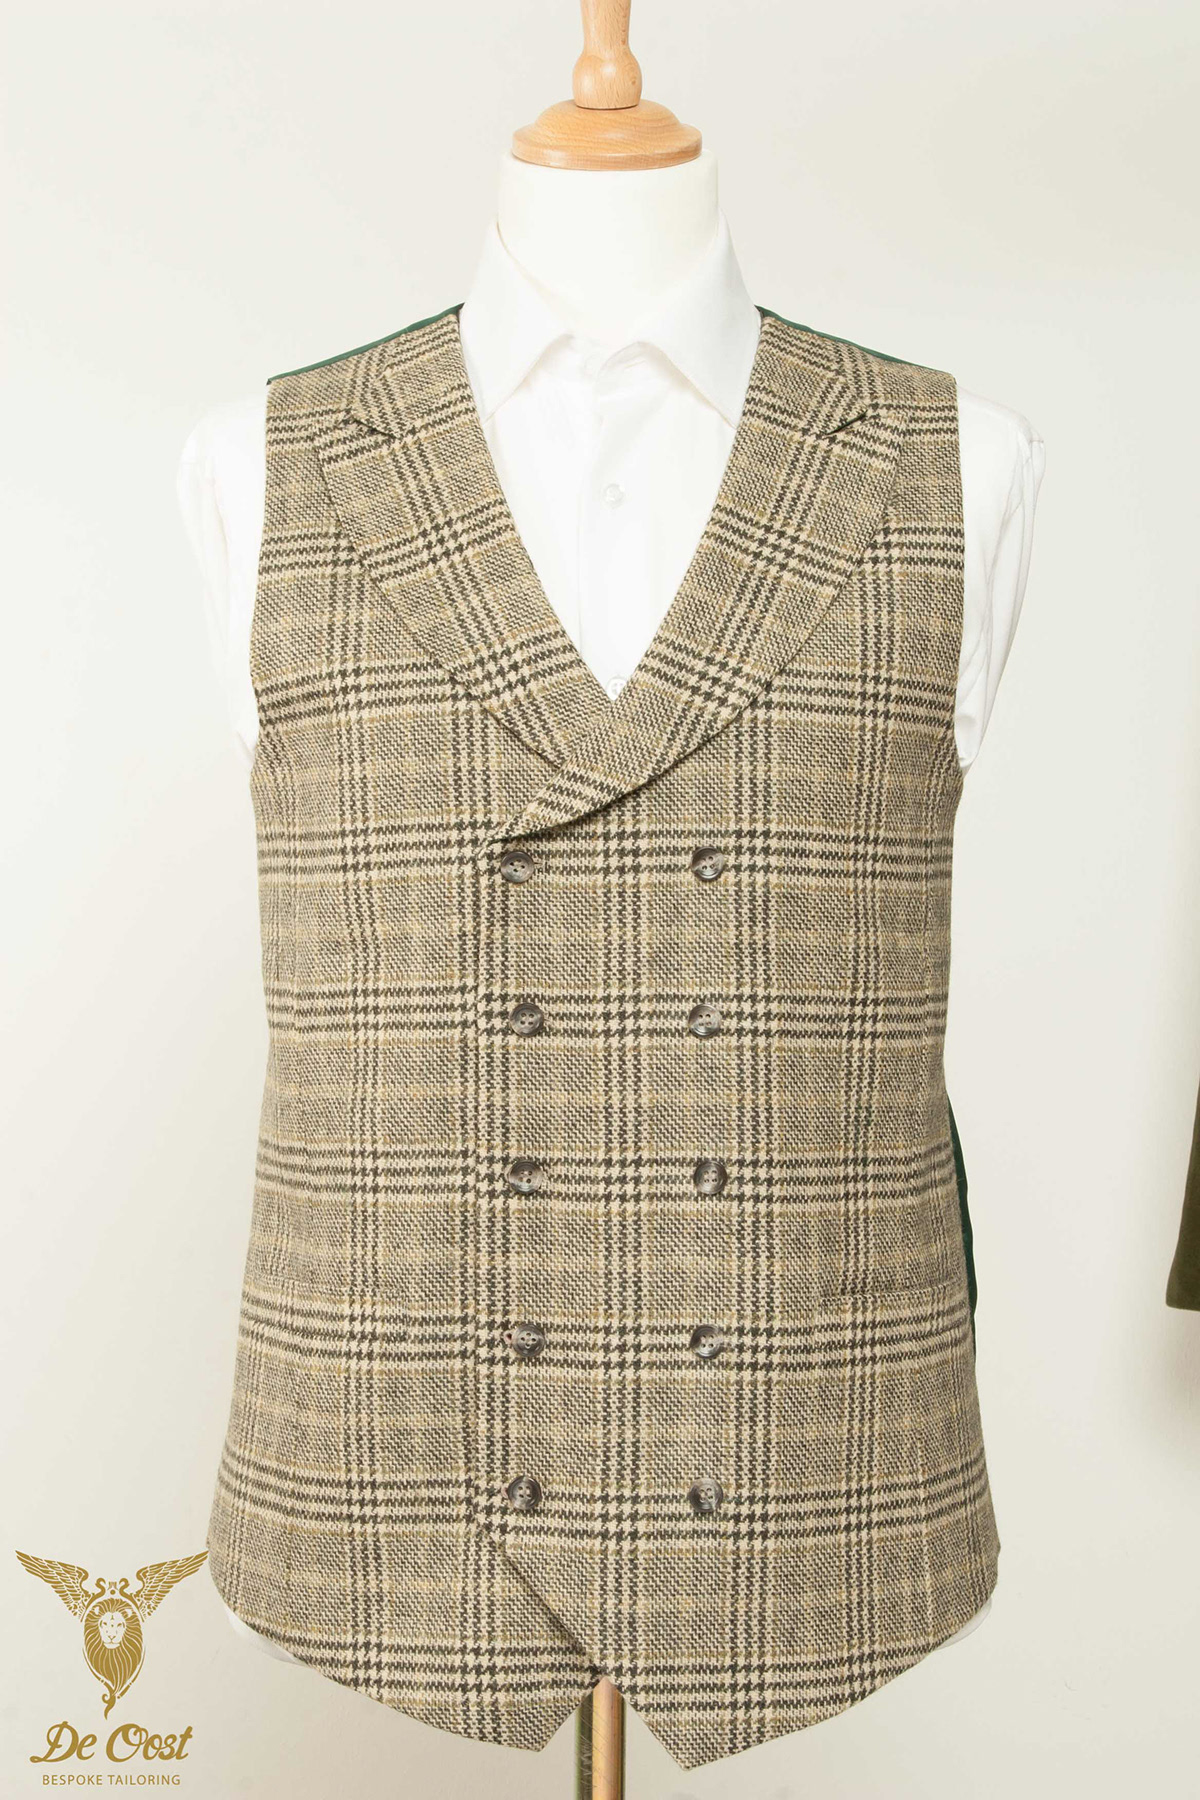 pima cotton Moleskin corduroy 3-piece suit Waistcoat Sports Jacket  hand craft  sartorial bespoke  Tailoring wedding